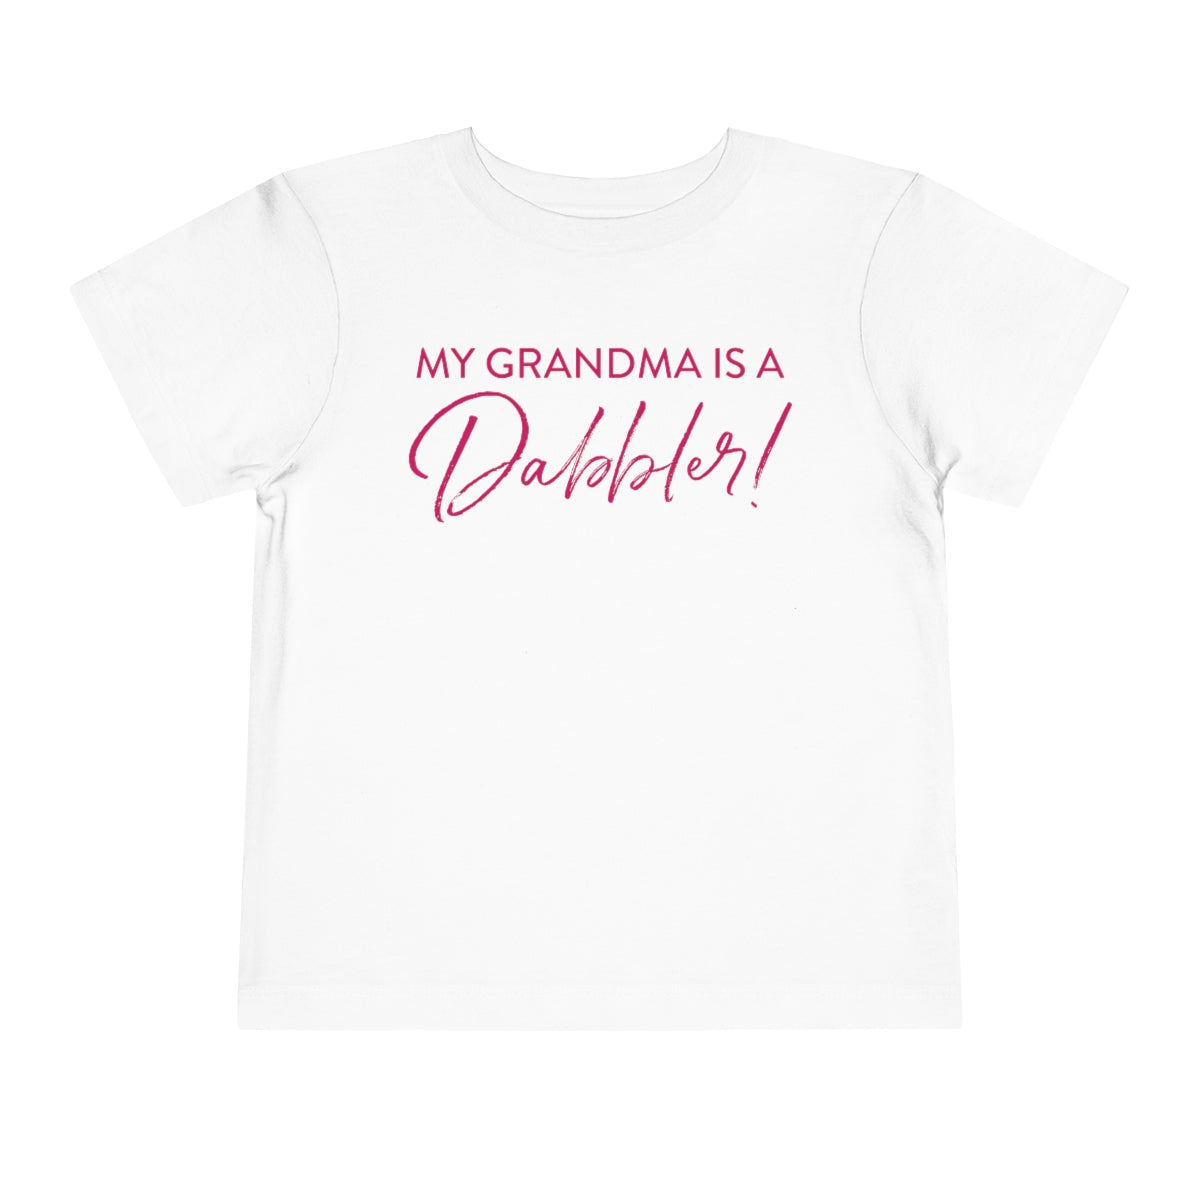 My Grandma is a Dabbler! (Pink)